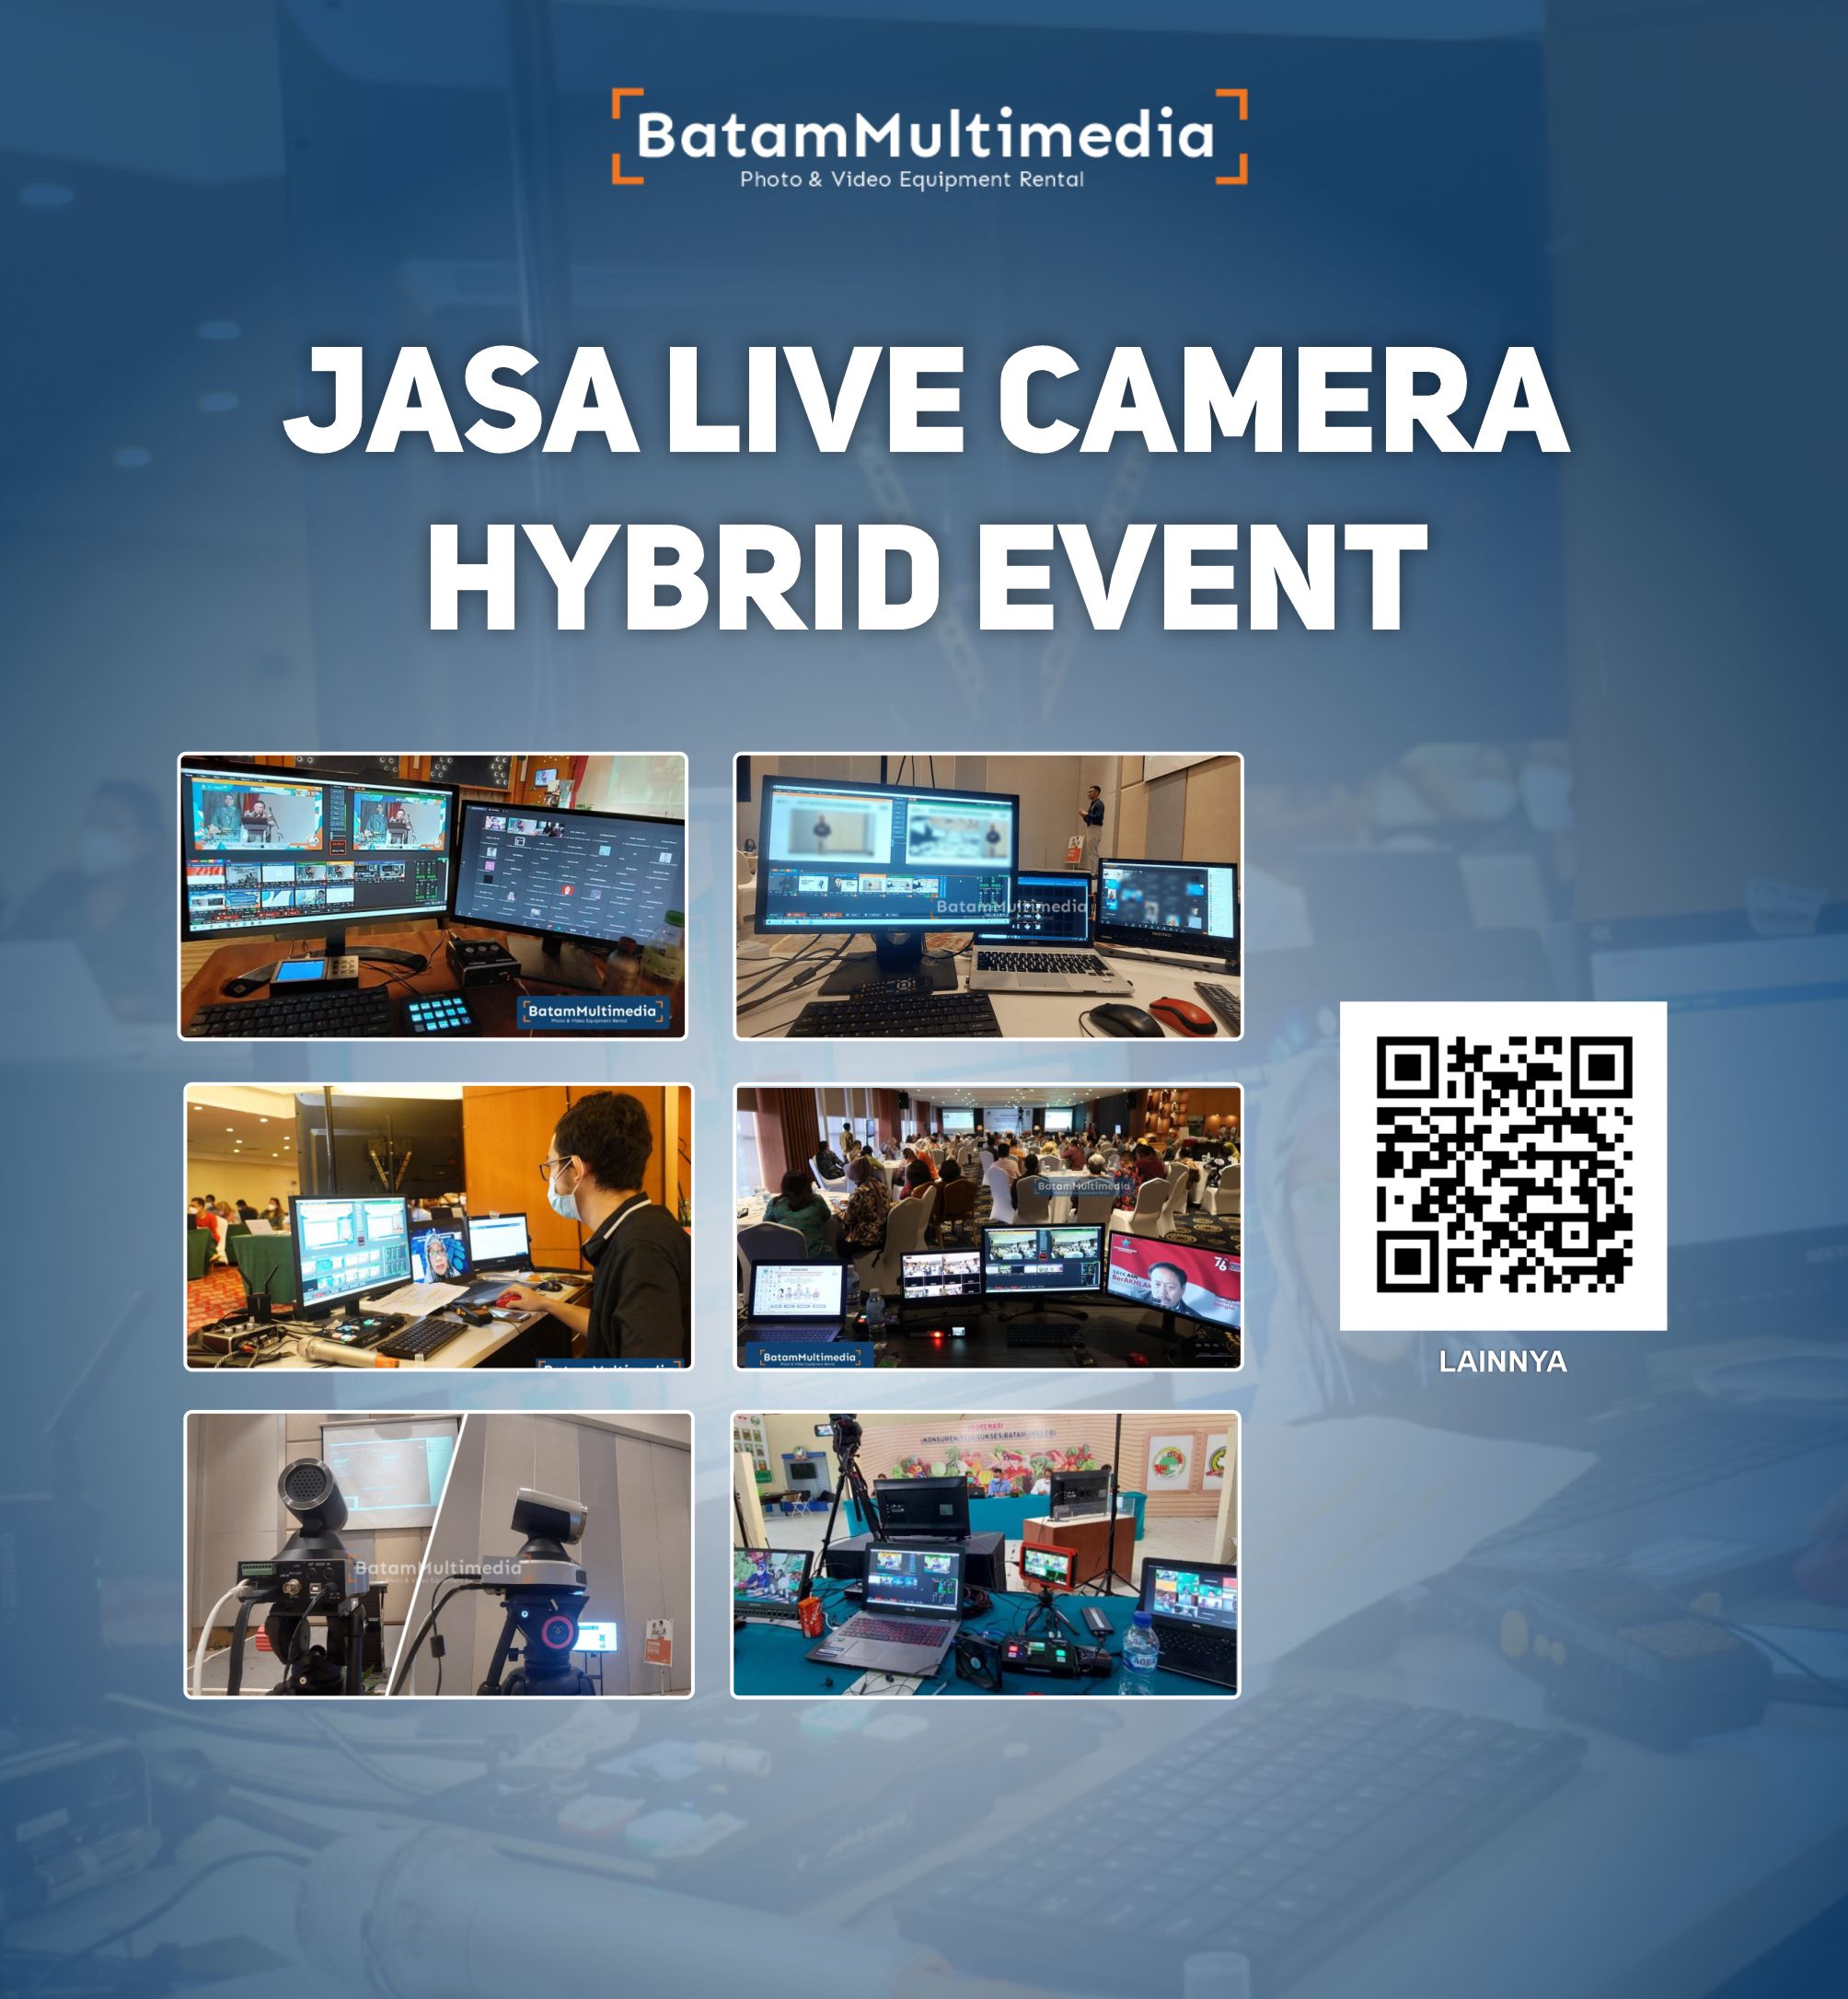 Jasa Live Hybrid Event Batam - Batam Multimedia 1